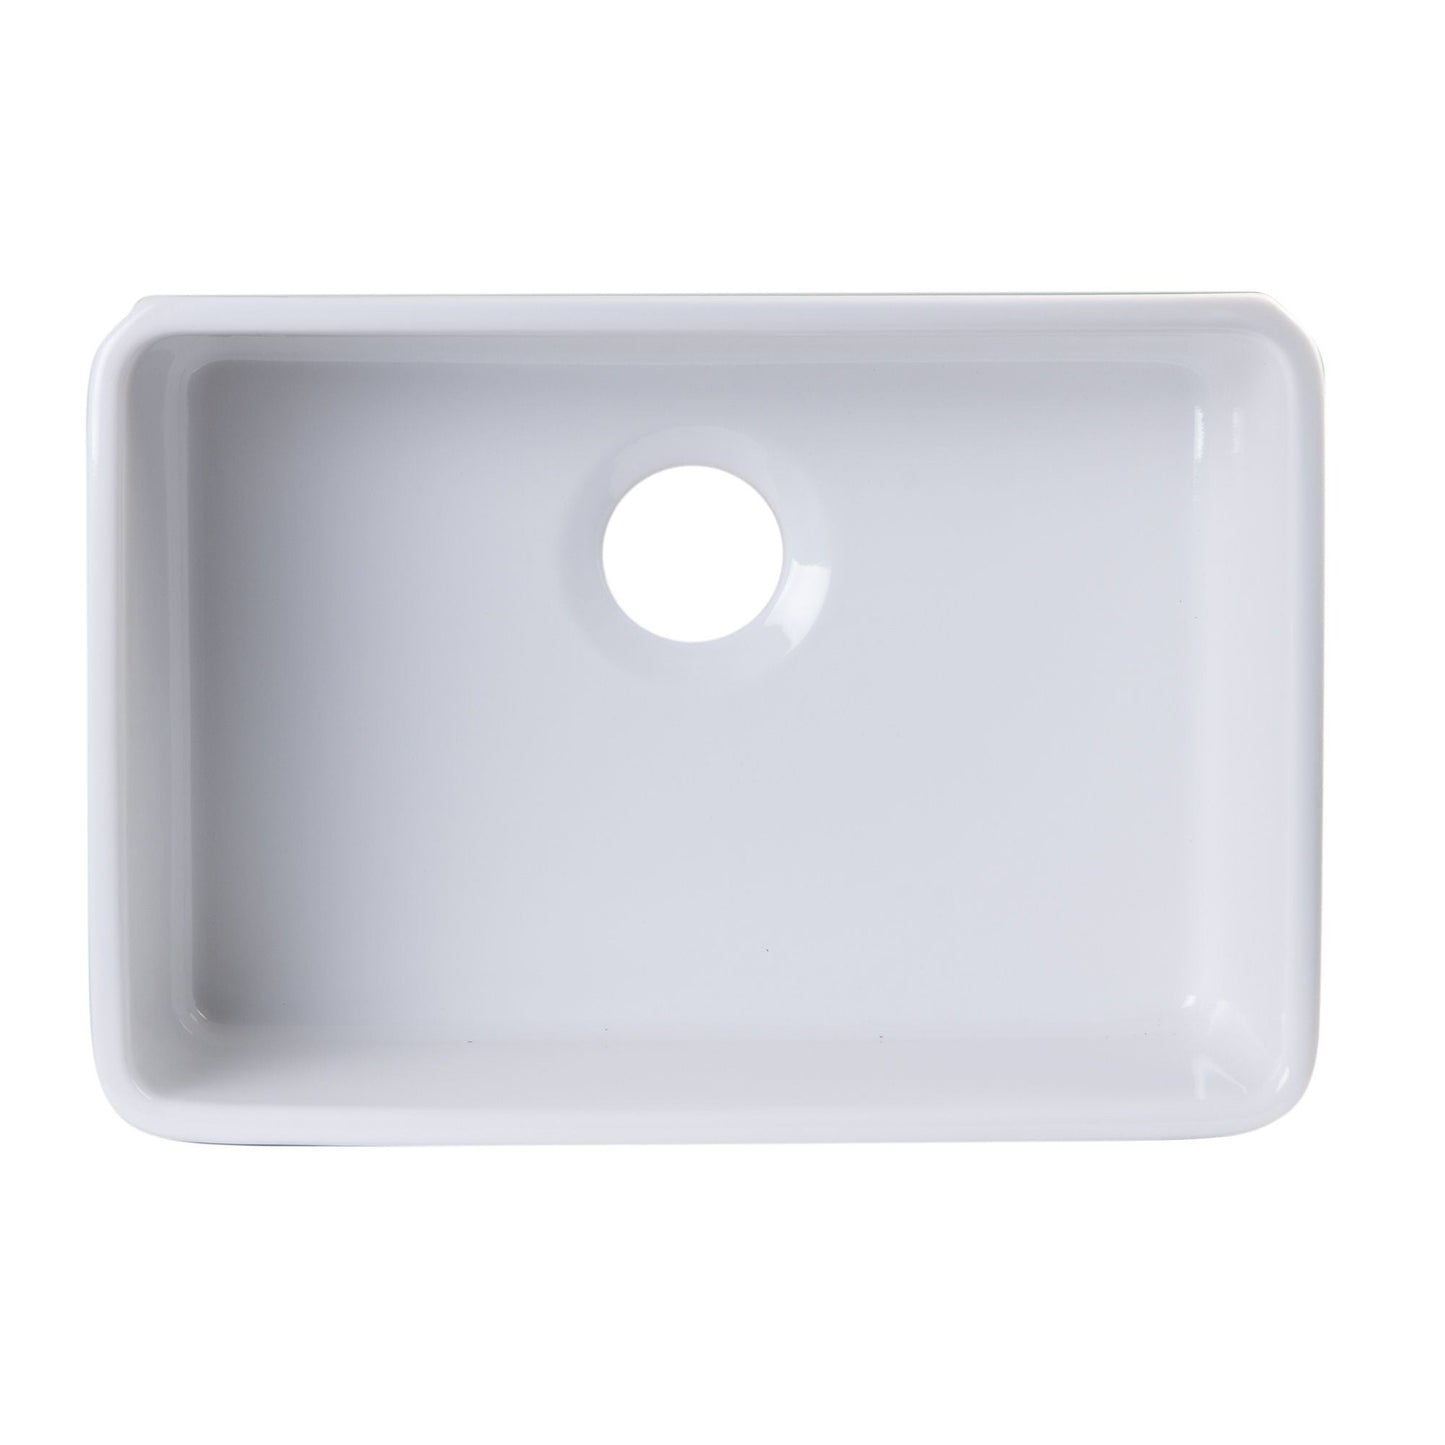 ALFI Brand AB503UM-W 24 inch White Single Bowl Fireclay Undermount Kitchen Sink